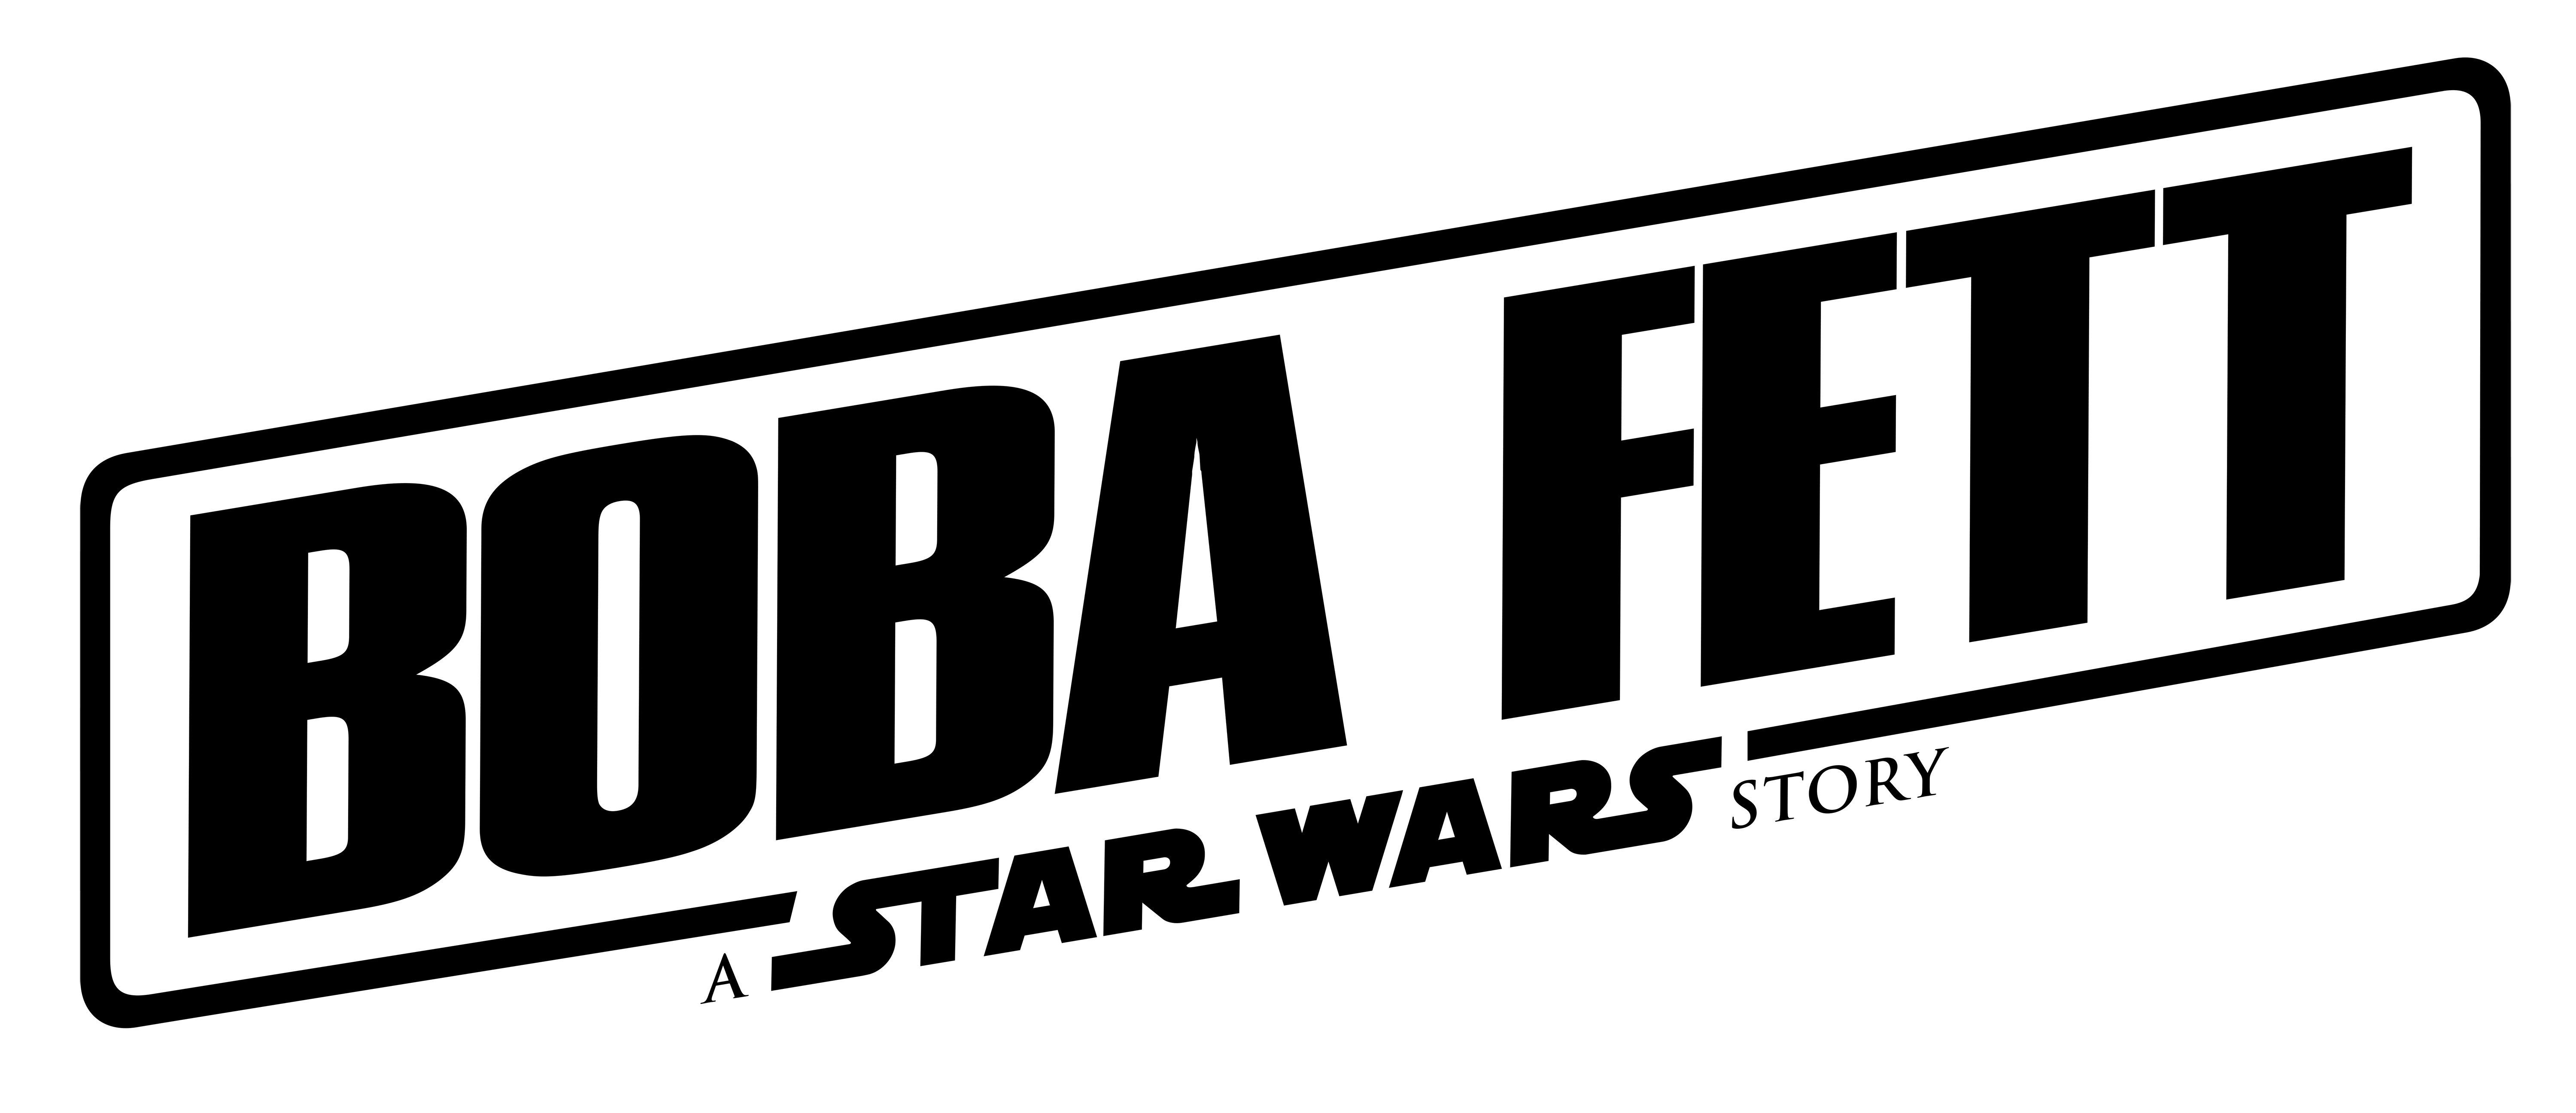 Boba Fett Logo - Boba Fett A Star Wars Story Logo Large Hi-Res | Milners Blog